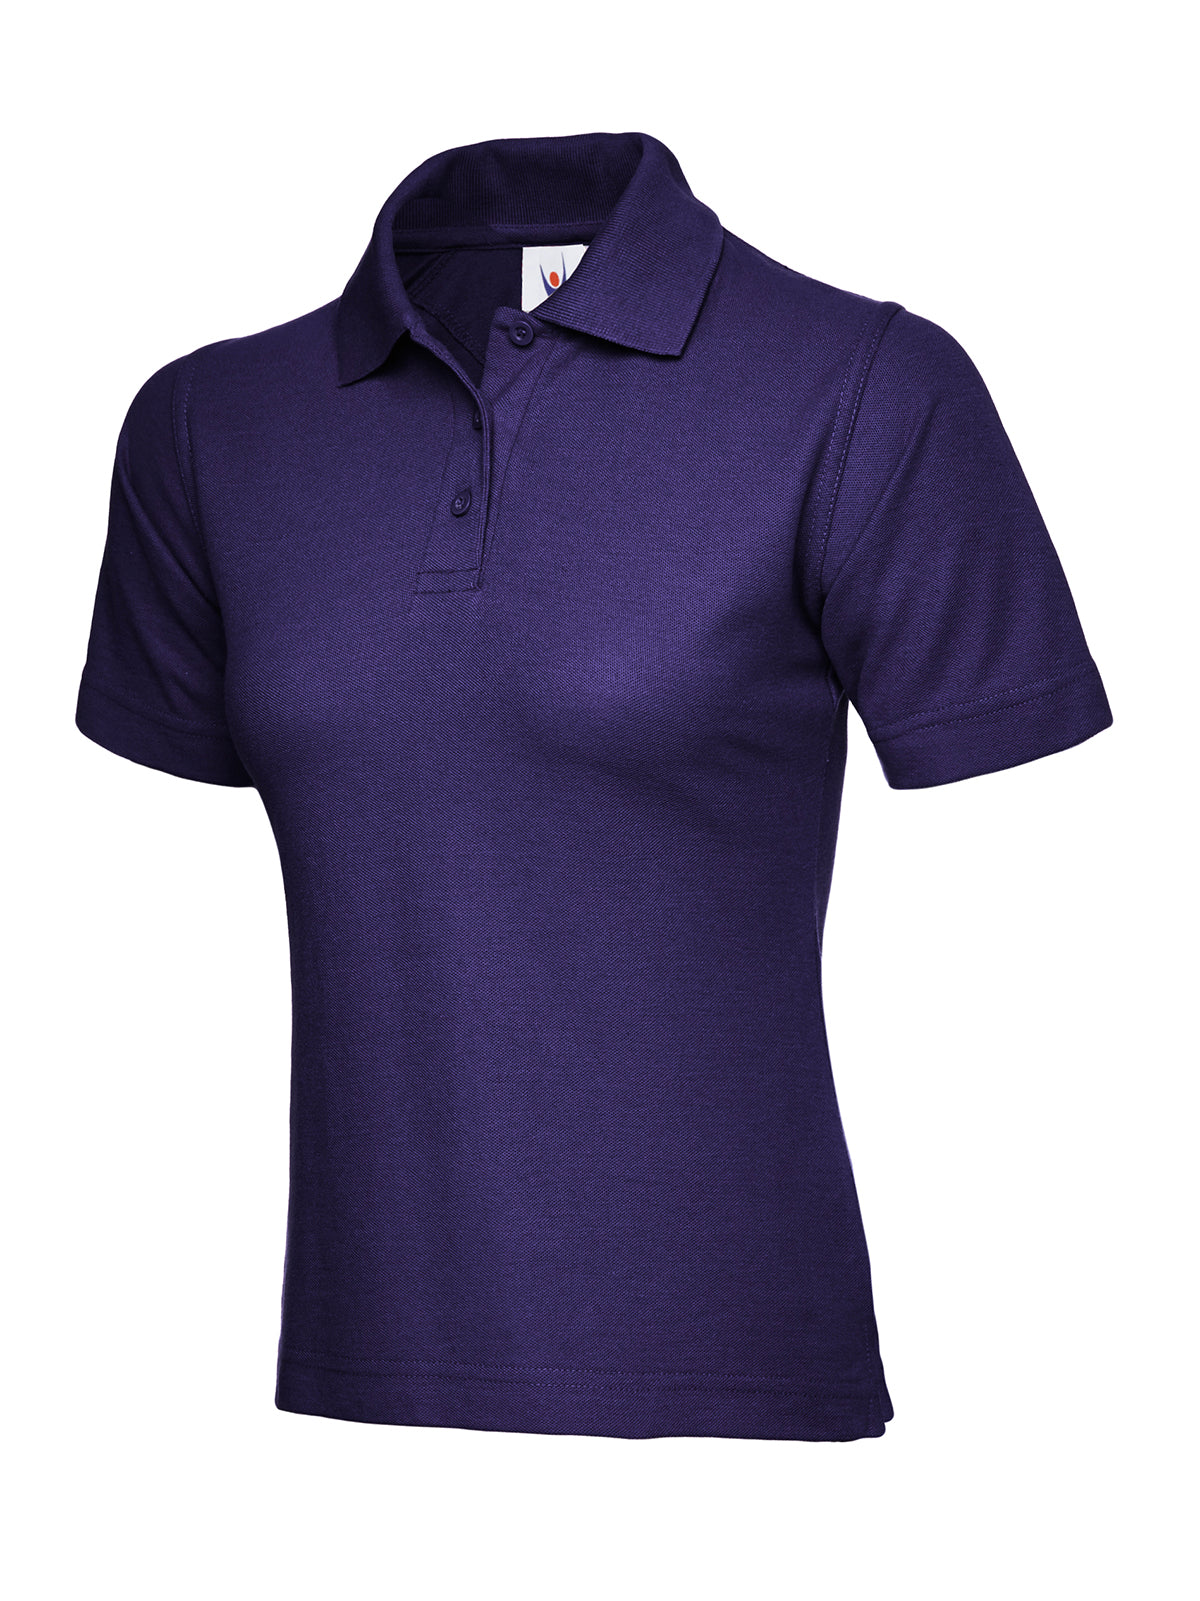 Uneek Ladies Classic Poloshirt UC106 - Purple